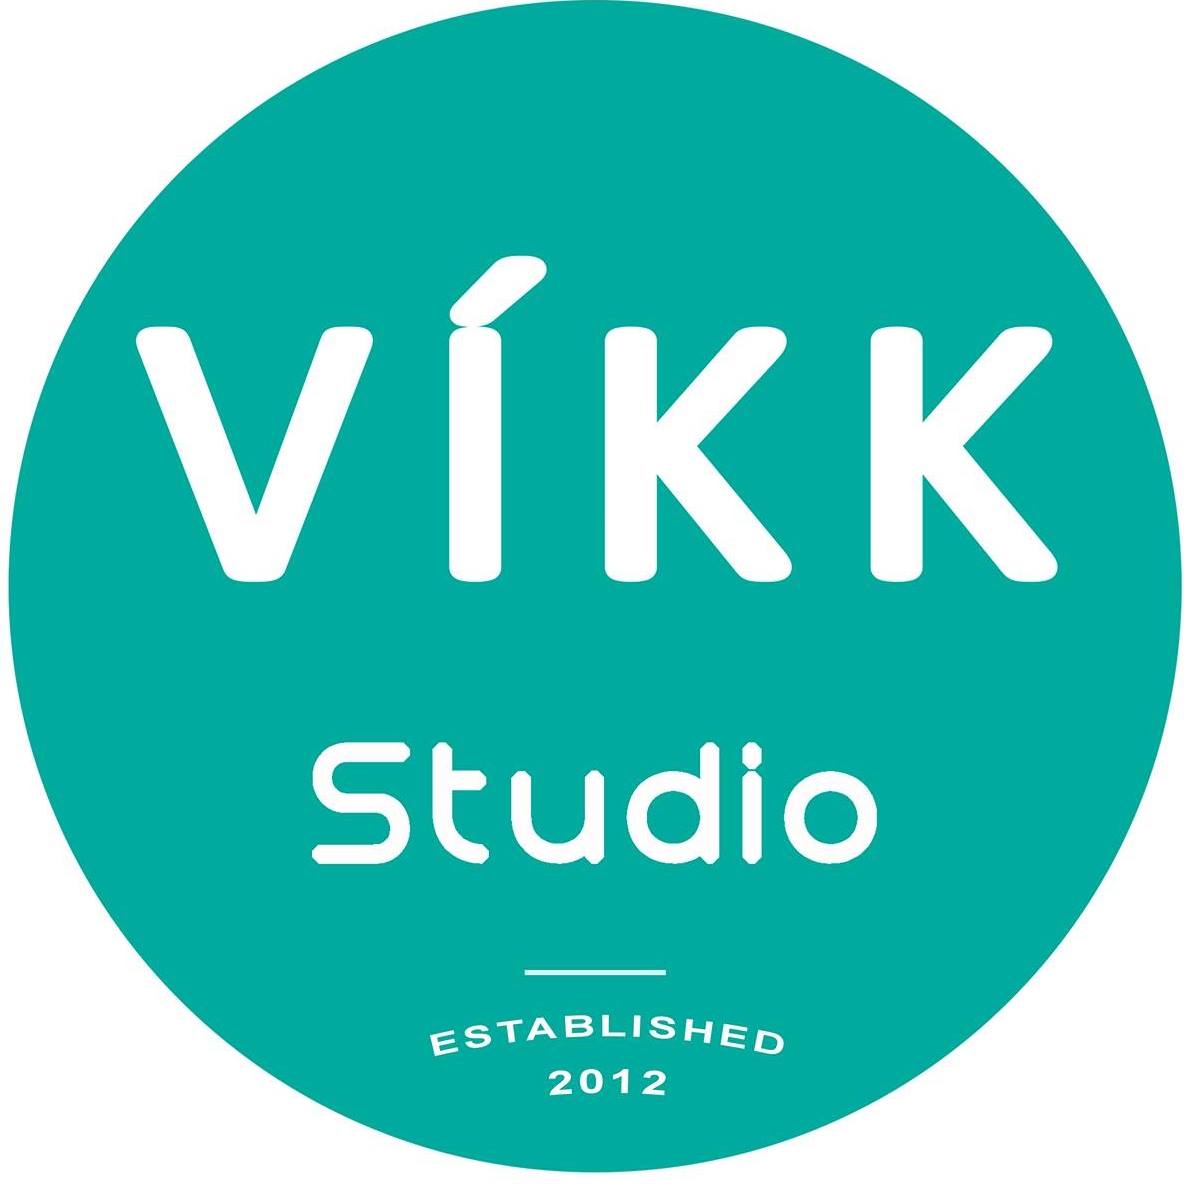 Víkk Studio